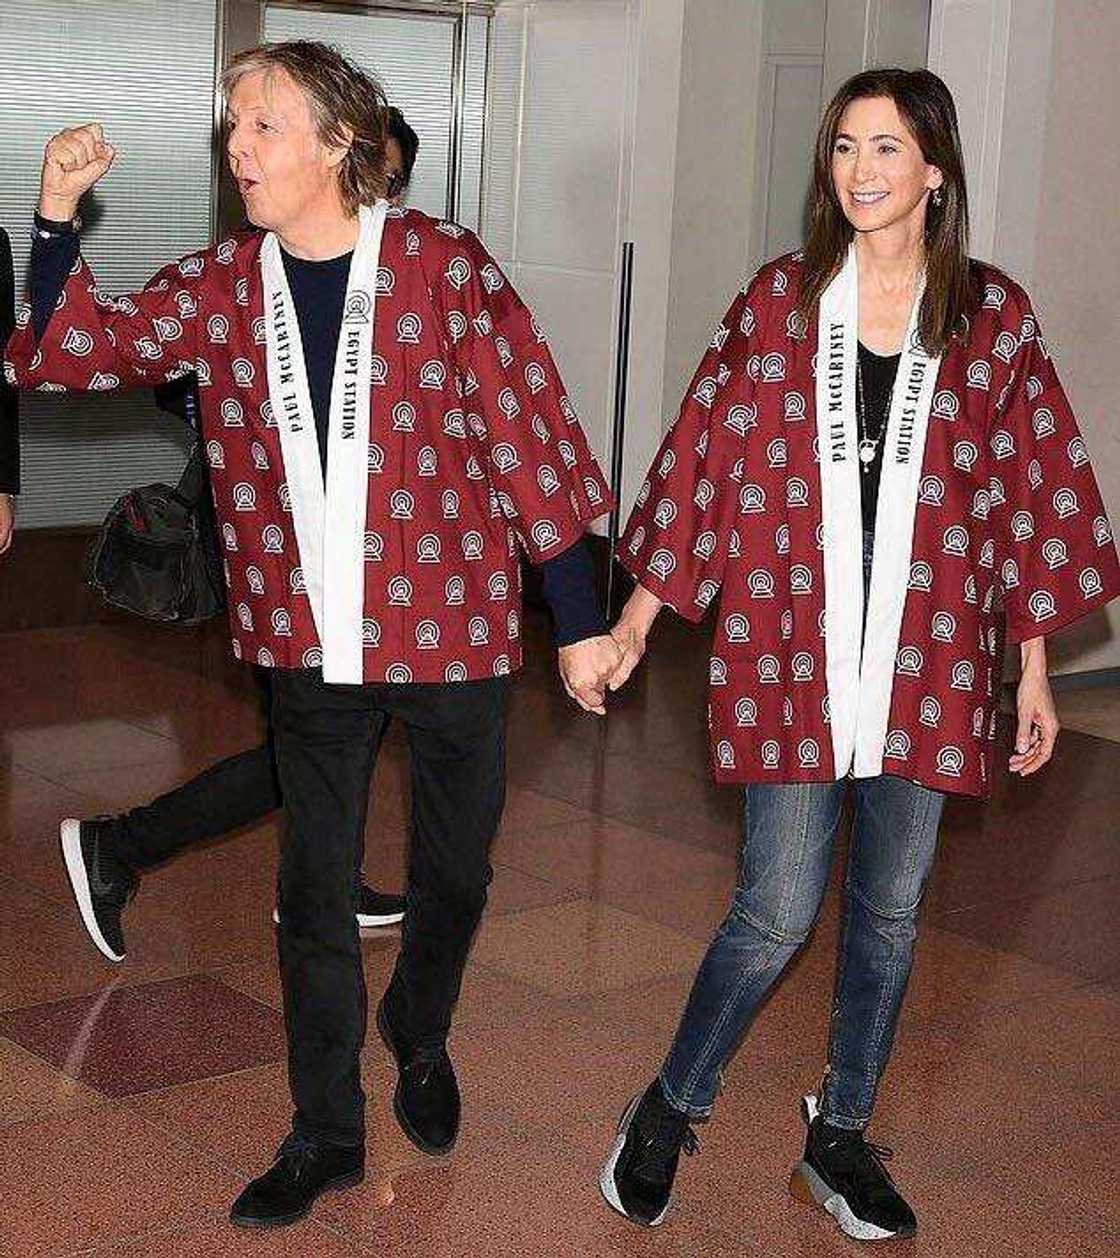 Paul McCartney and his wife